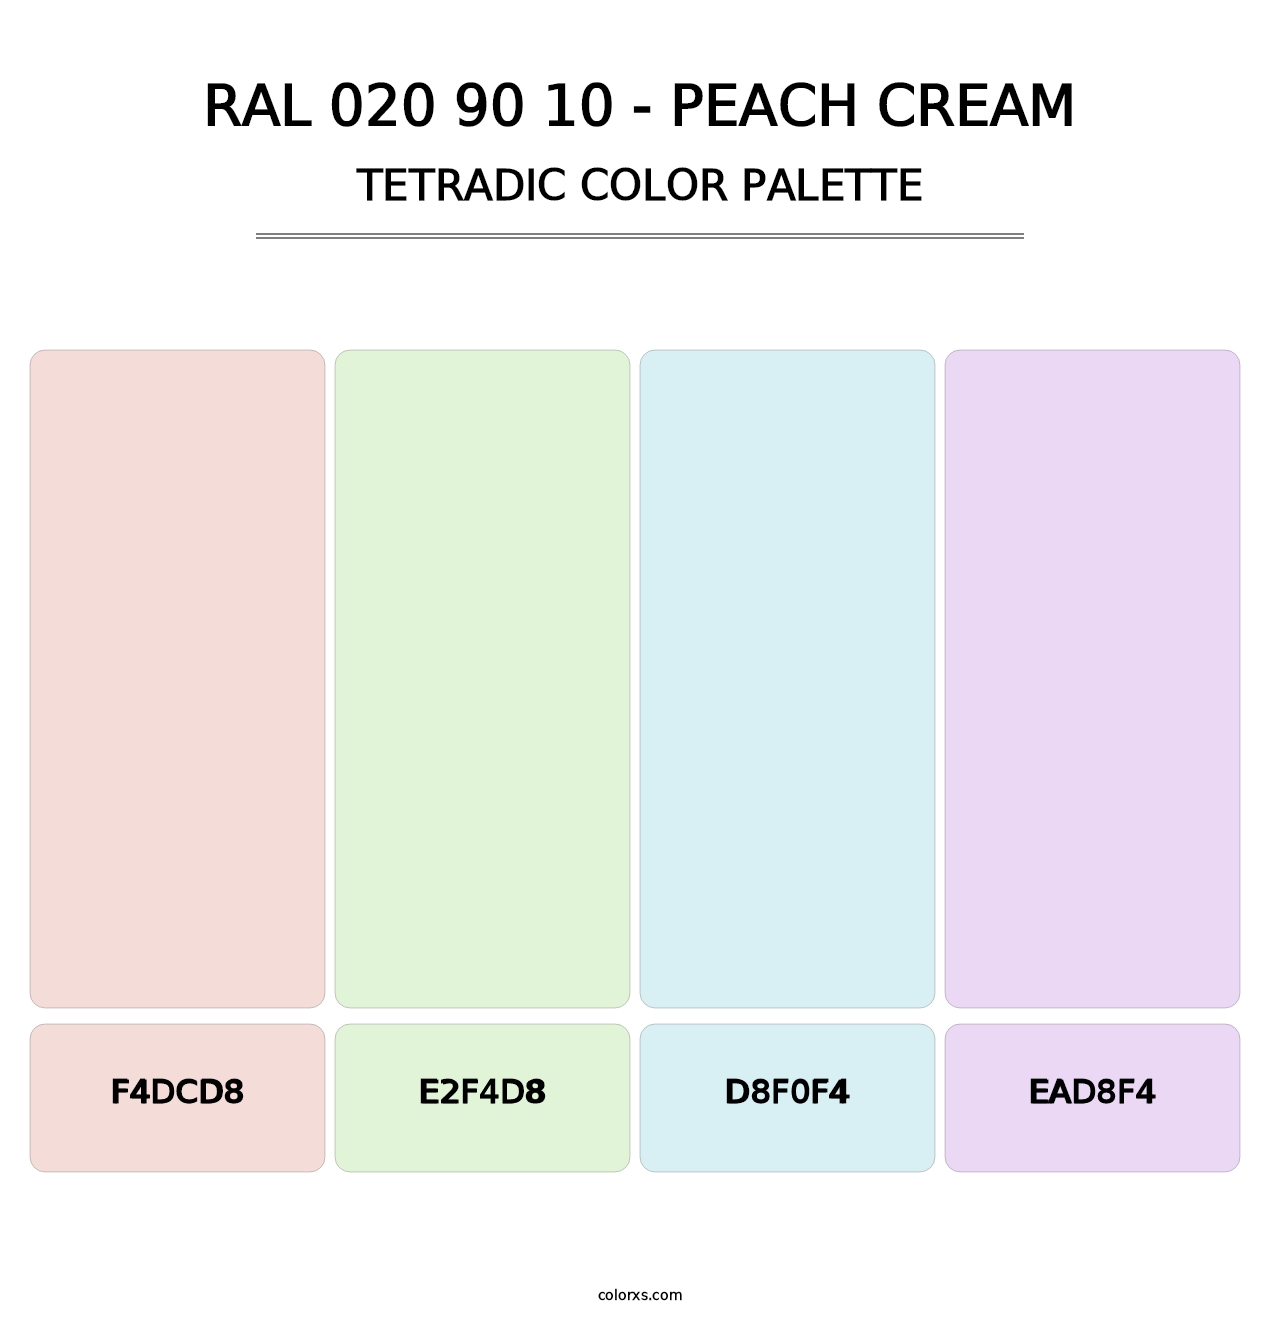 RAL 020 90 10 - Peach Cream - Tetradic Color Palette